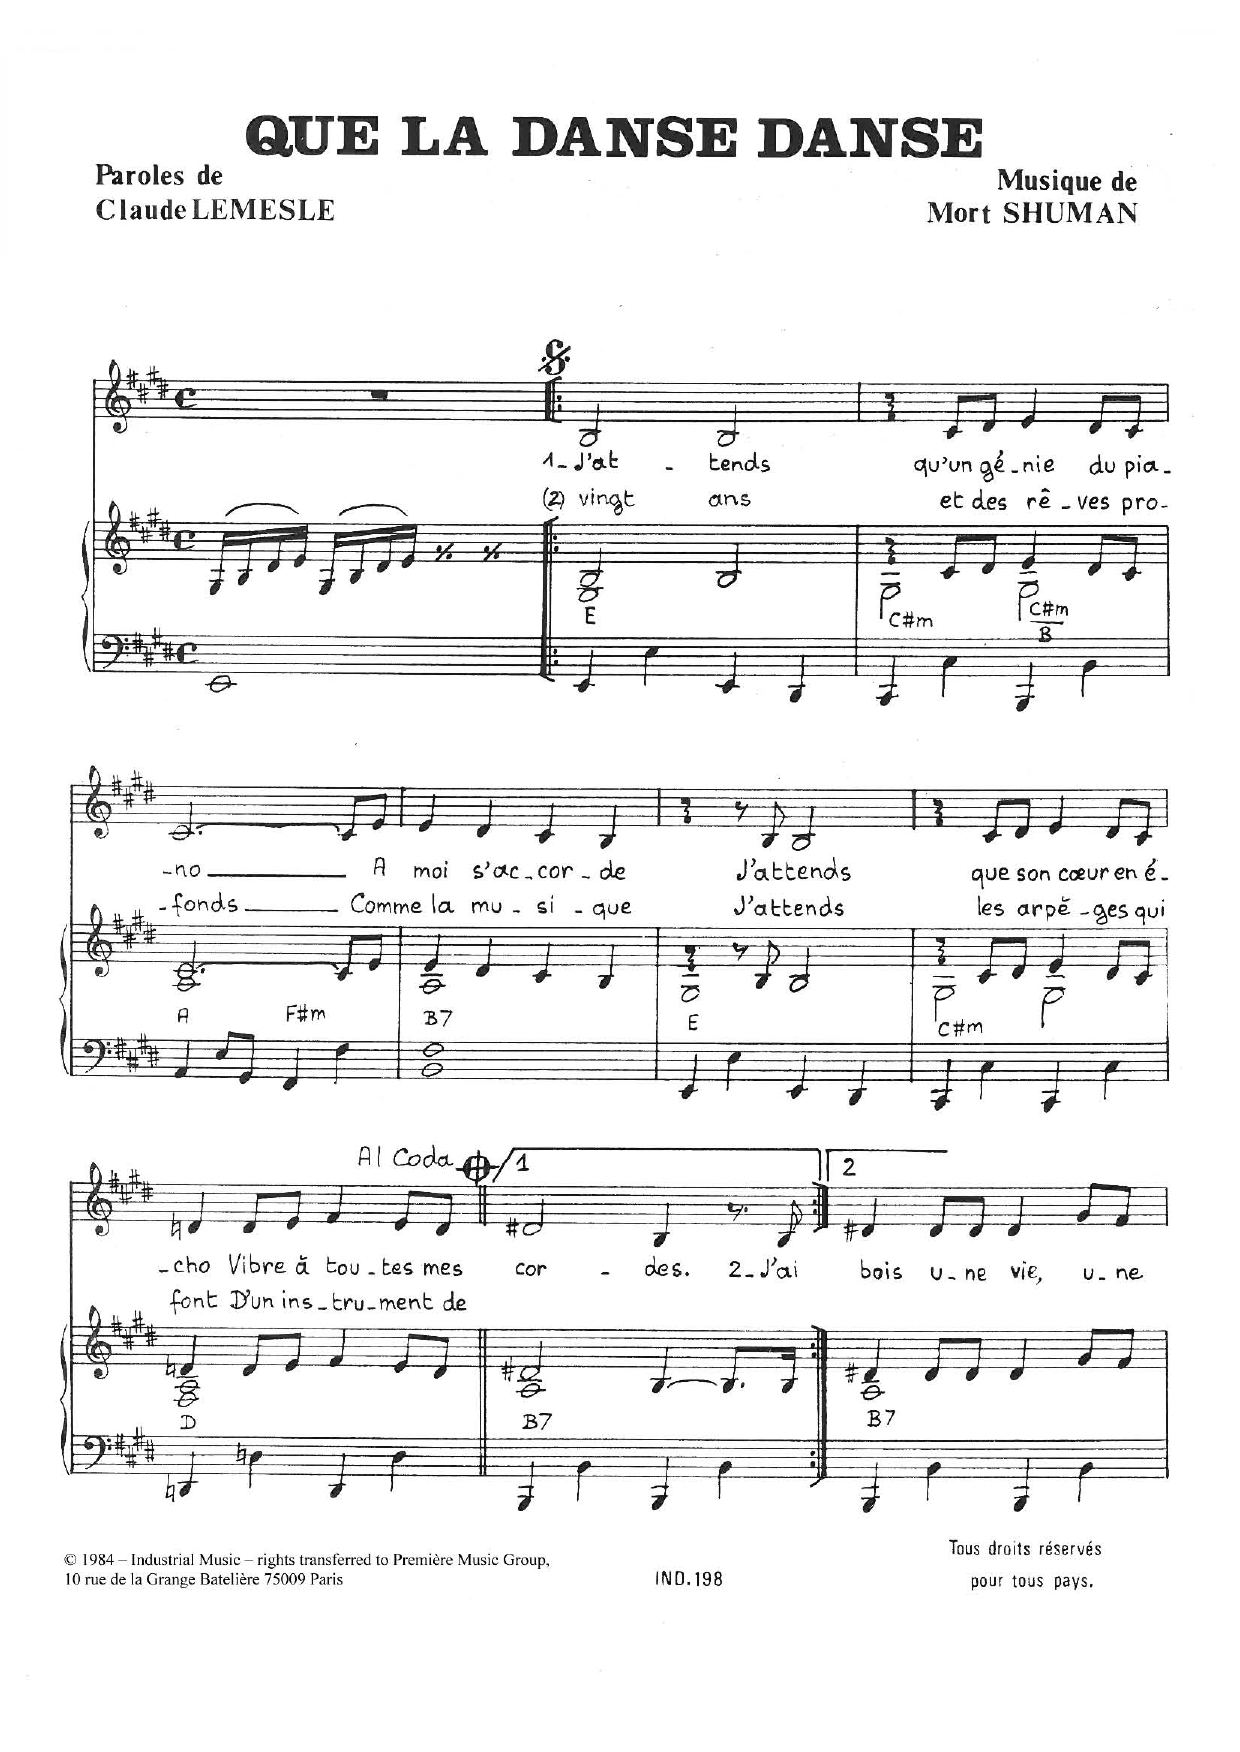 Mort Shuman Que La Danse Danse Sheet Music Notes & Chords for Piano & Vocal - Download or Print PDF